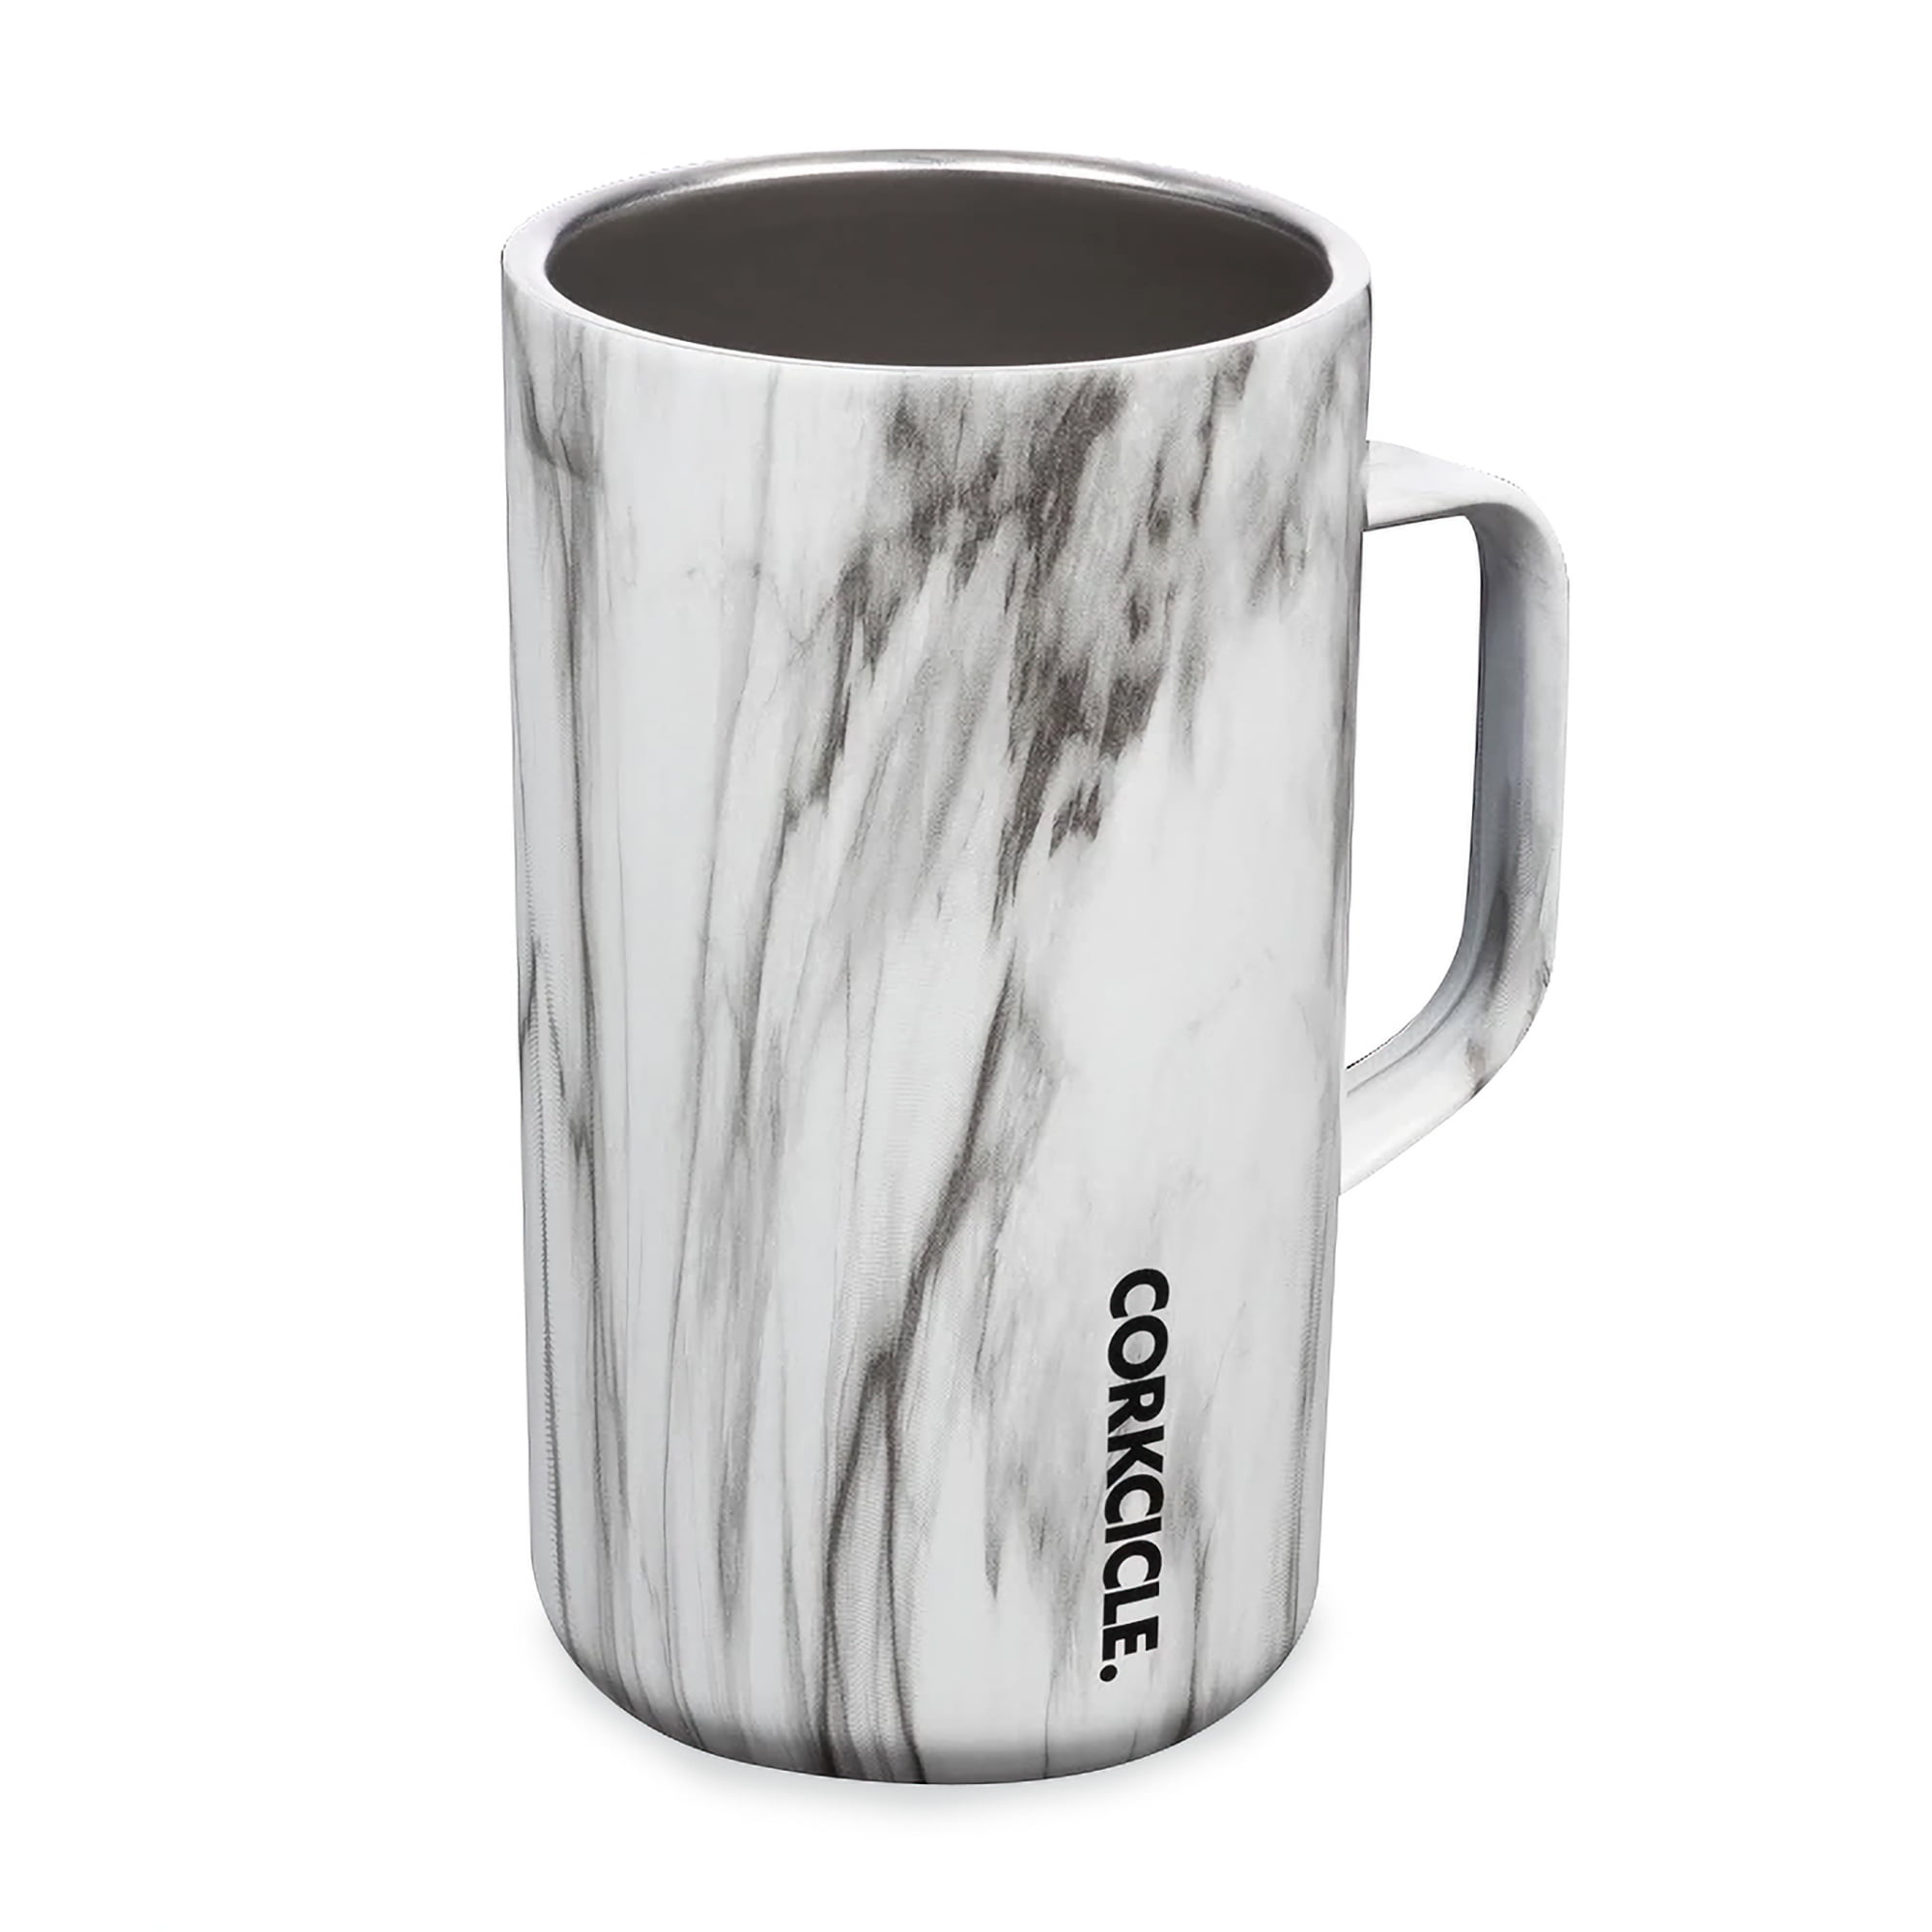 Woodland Camo Coffee Mug for Sale by ARTPICS SIMPLE